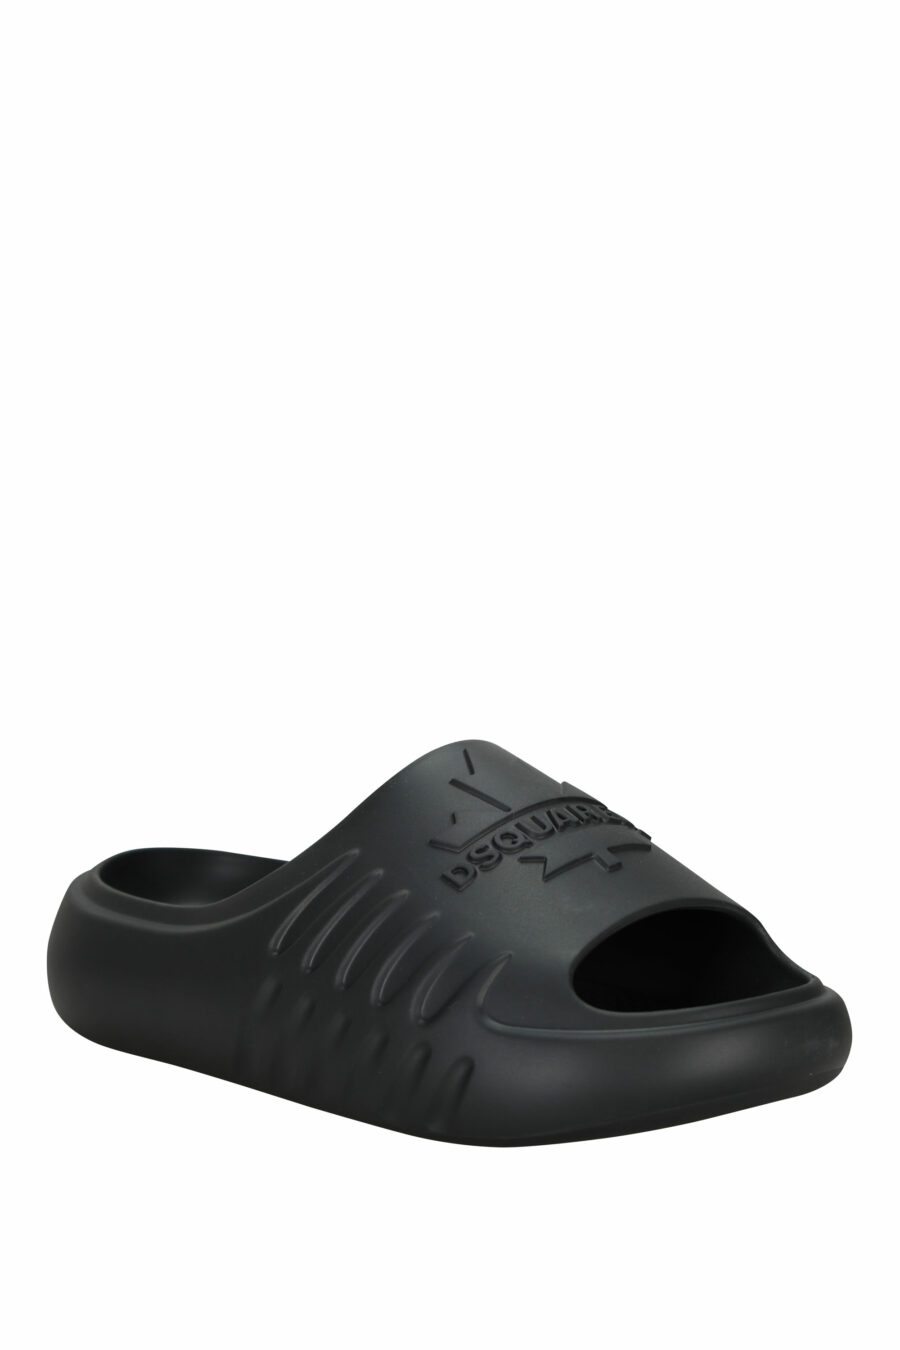 Black rubber flip flops with monochrome logo - 8055777295403 1